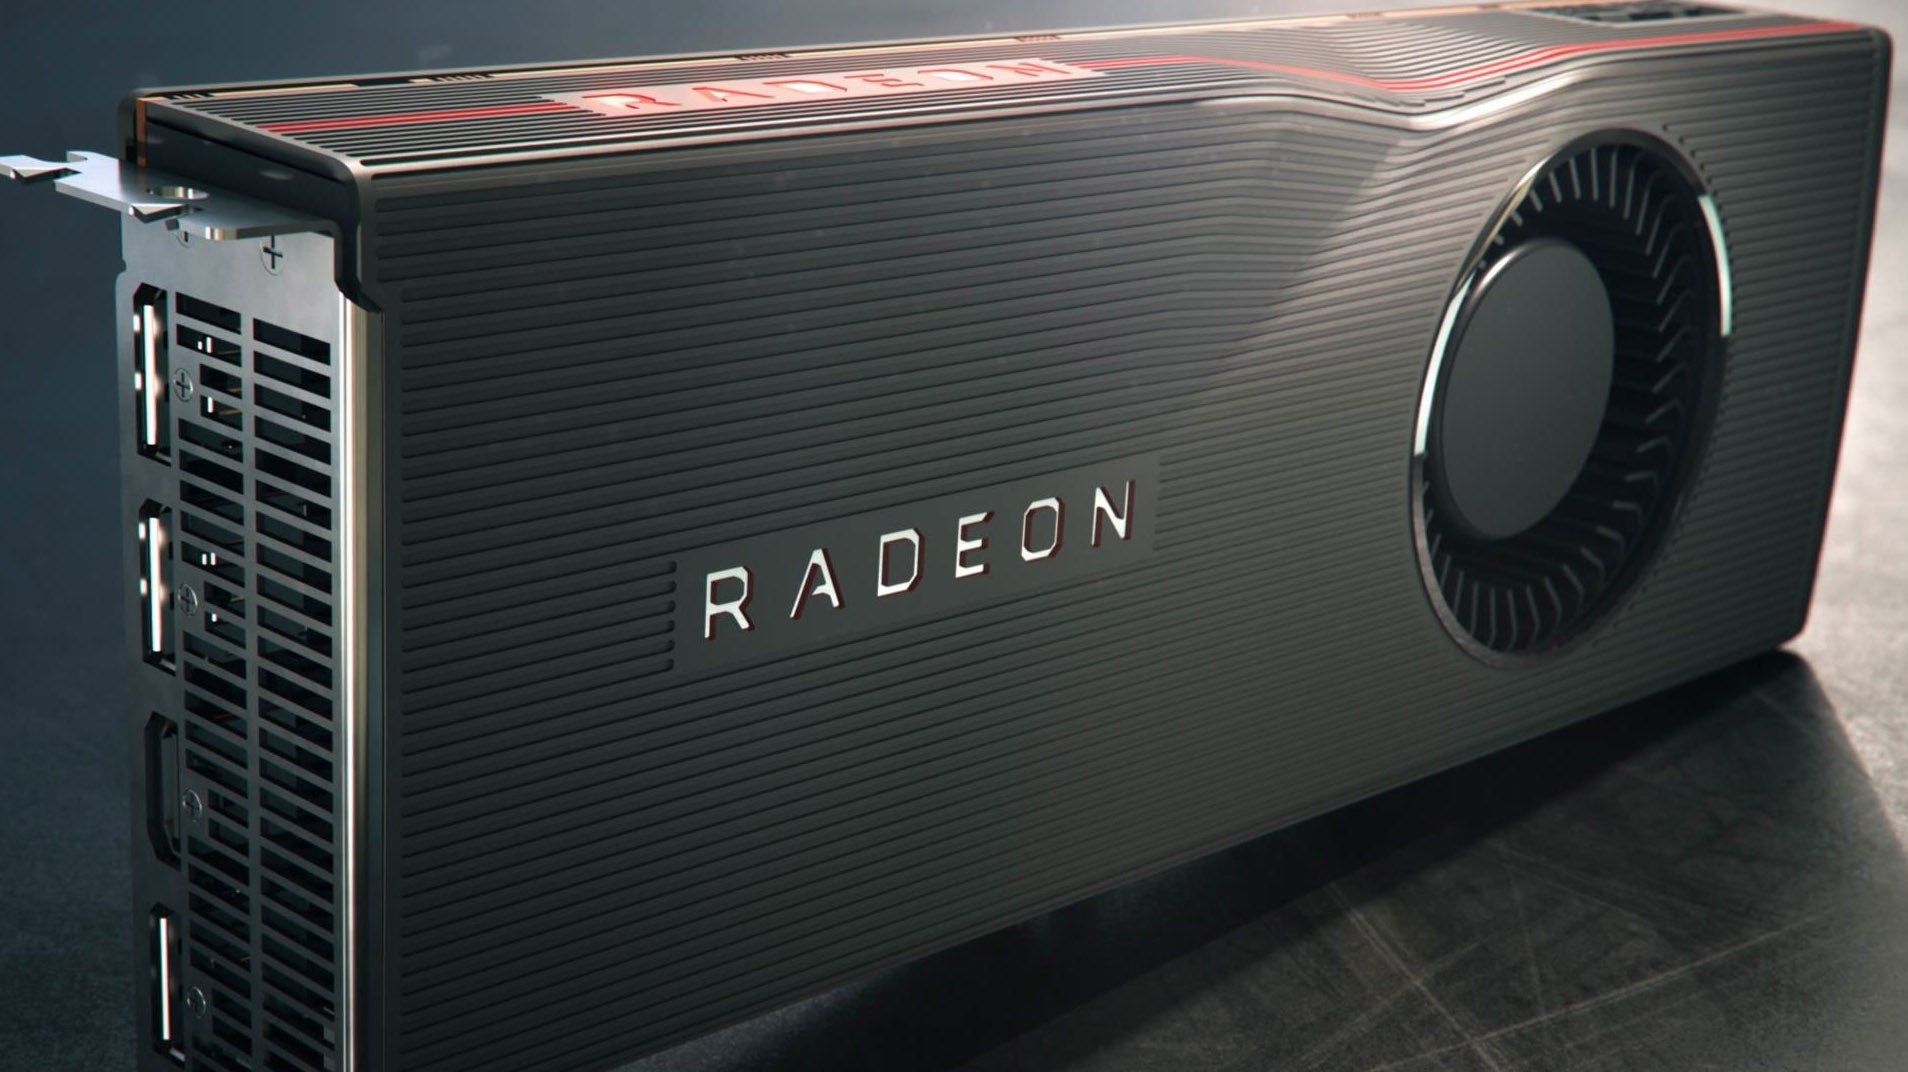 Bilder zu AMD Radeon RX 5700/ RX 5700 XT - Test: Konfrontationskurs mit Nvidia Super